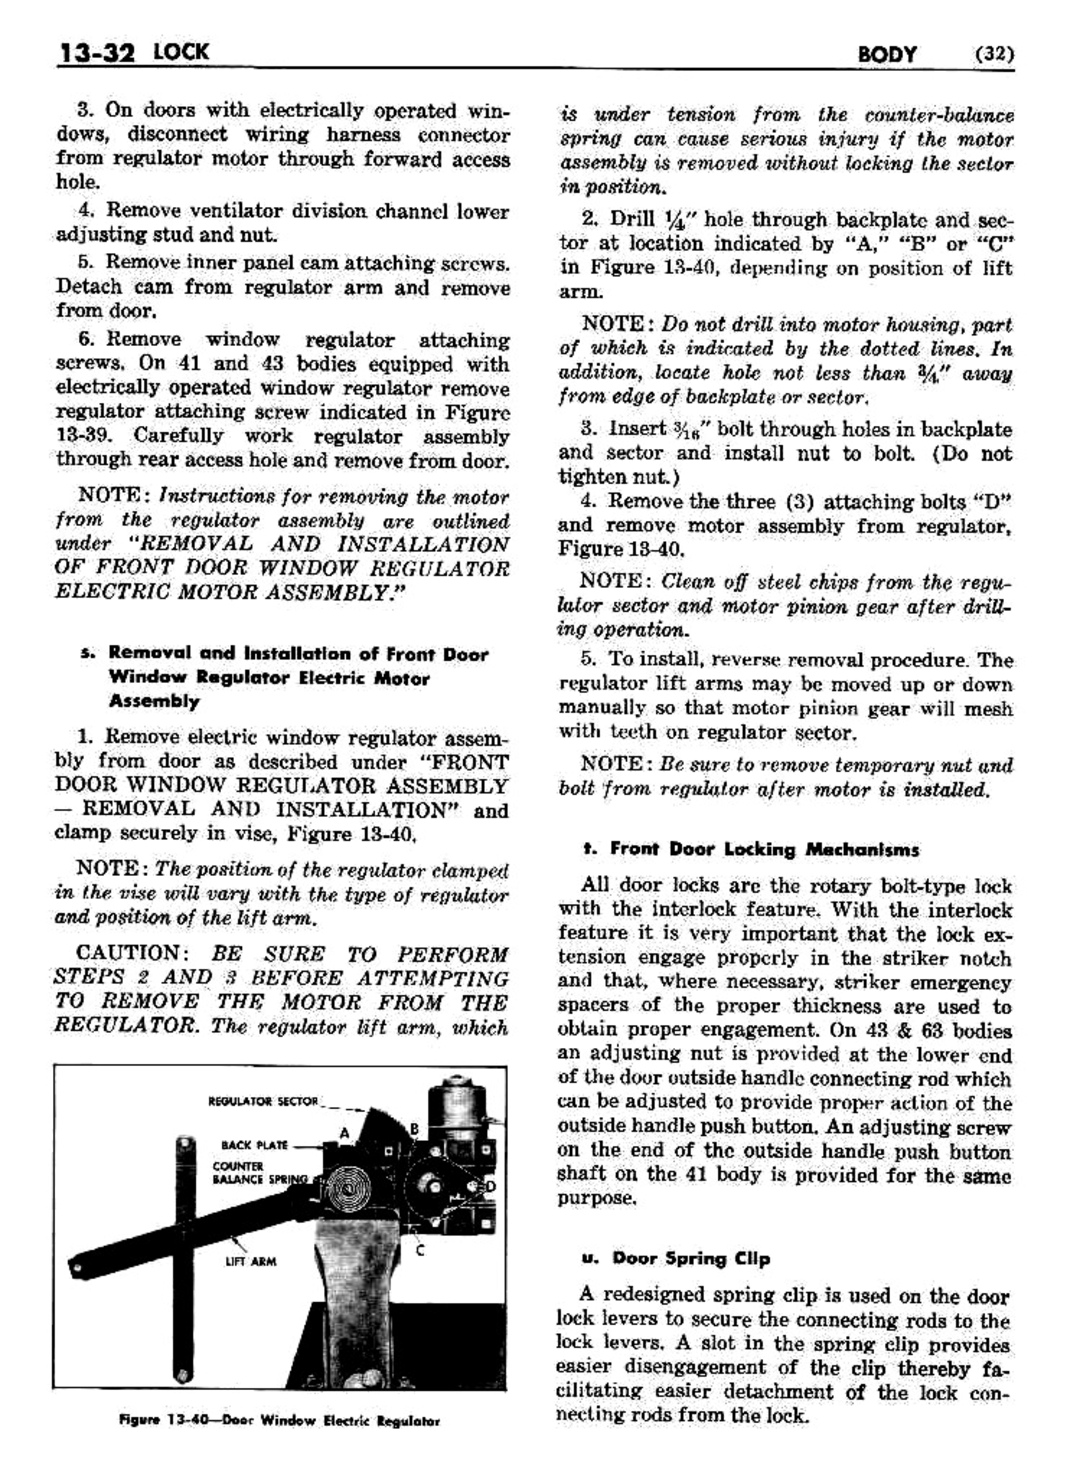 n_1958 Buick Body Service Manual-033-033.jpg